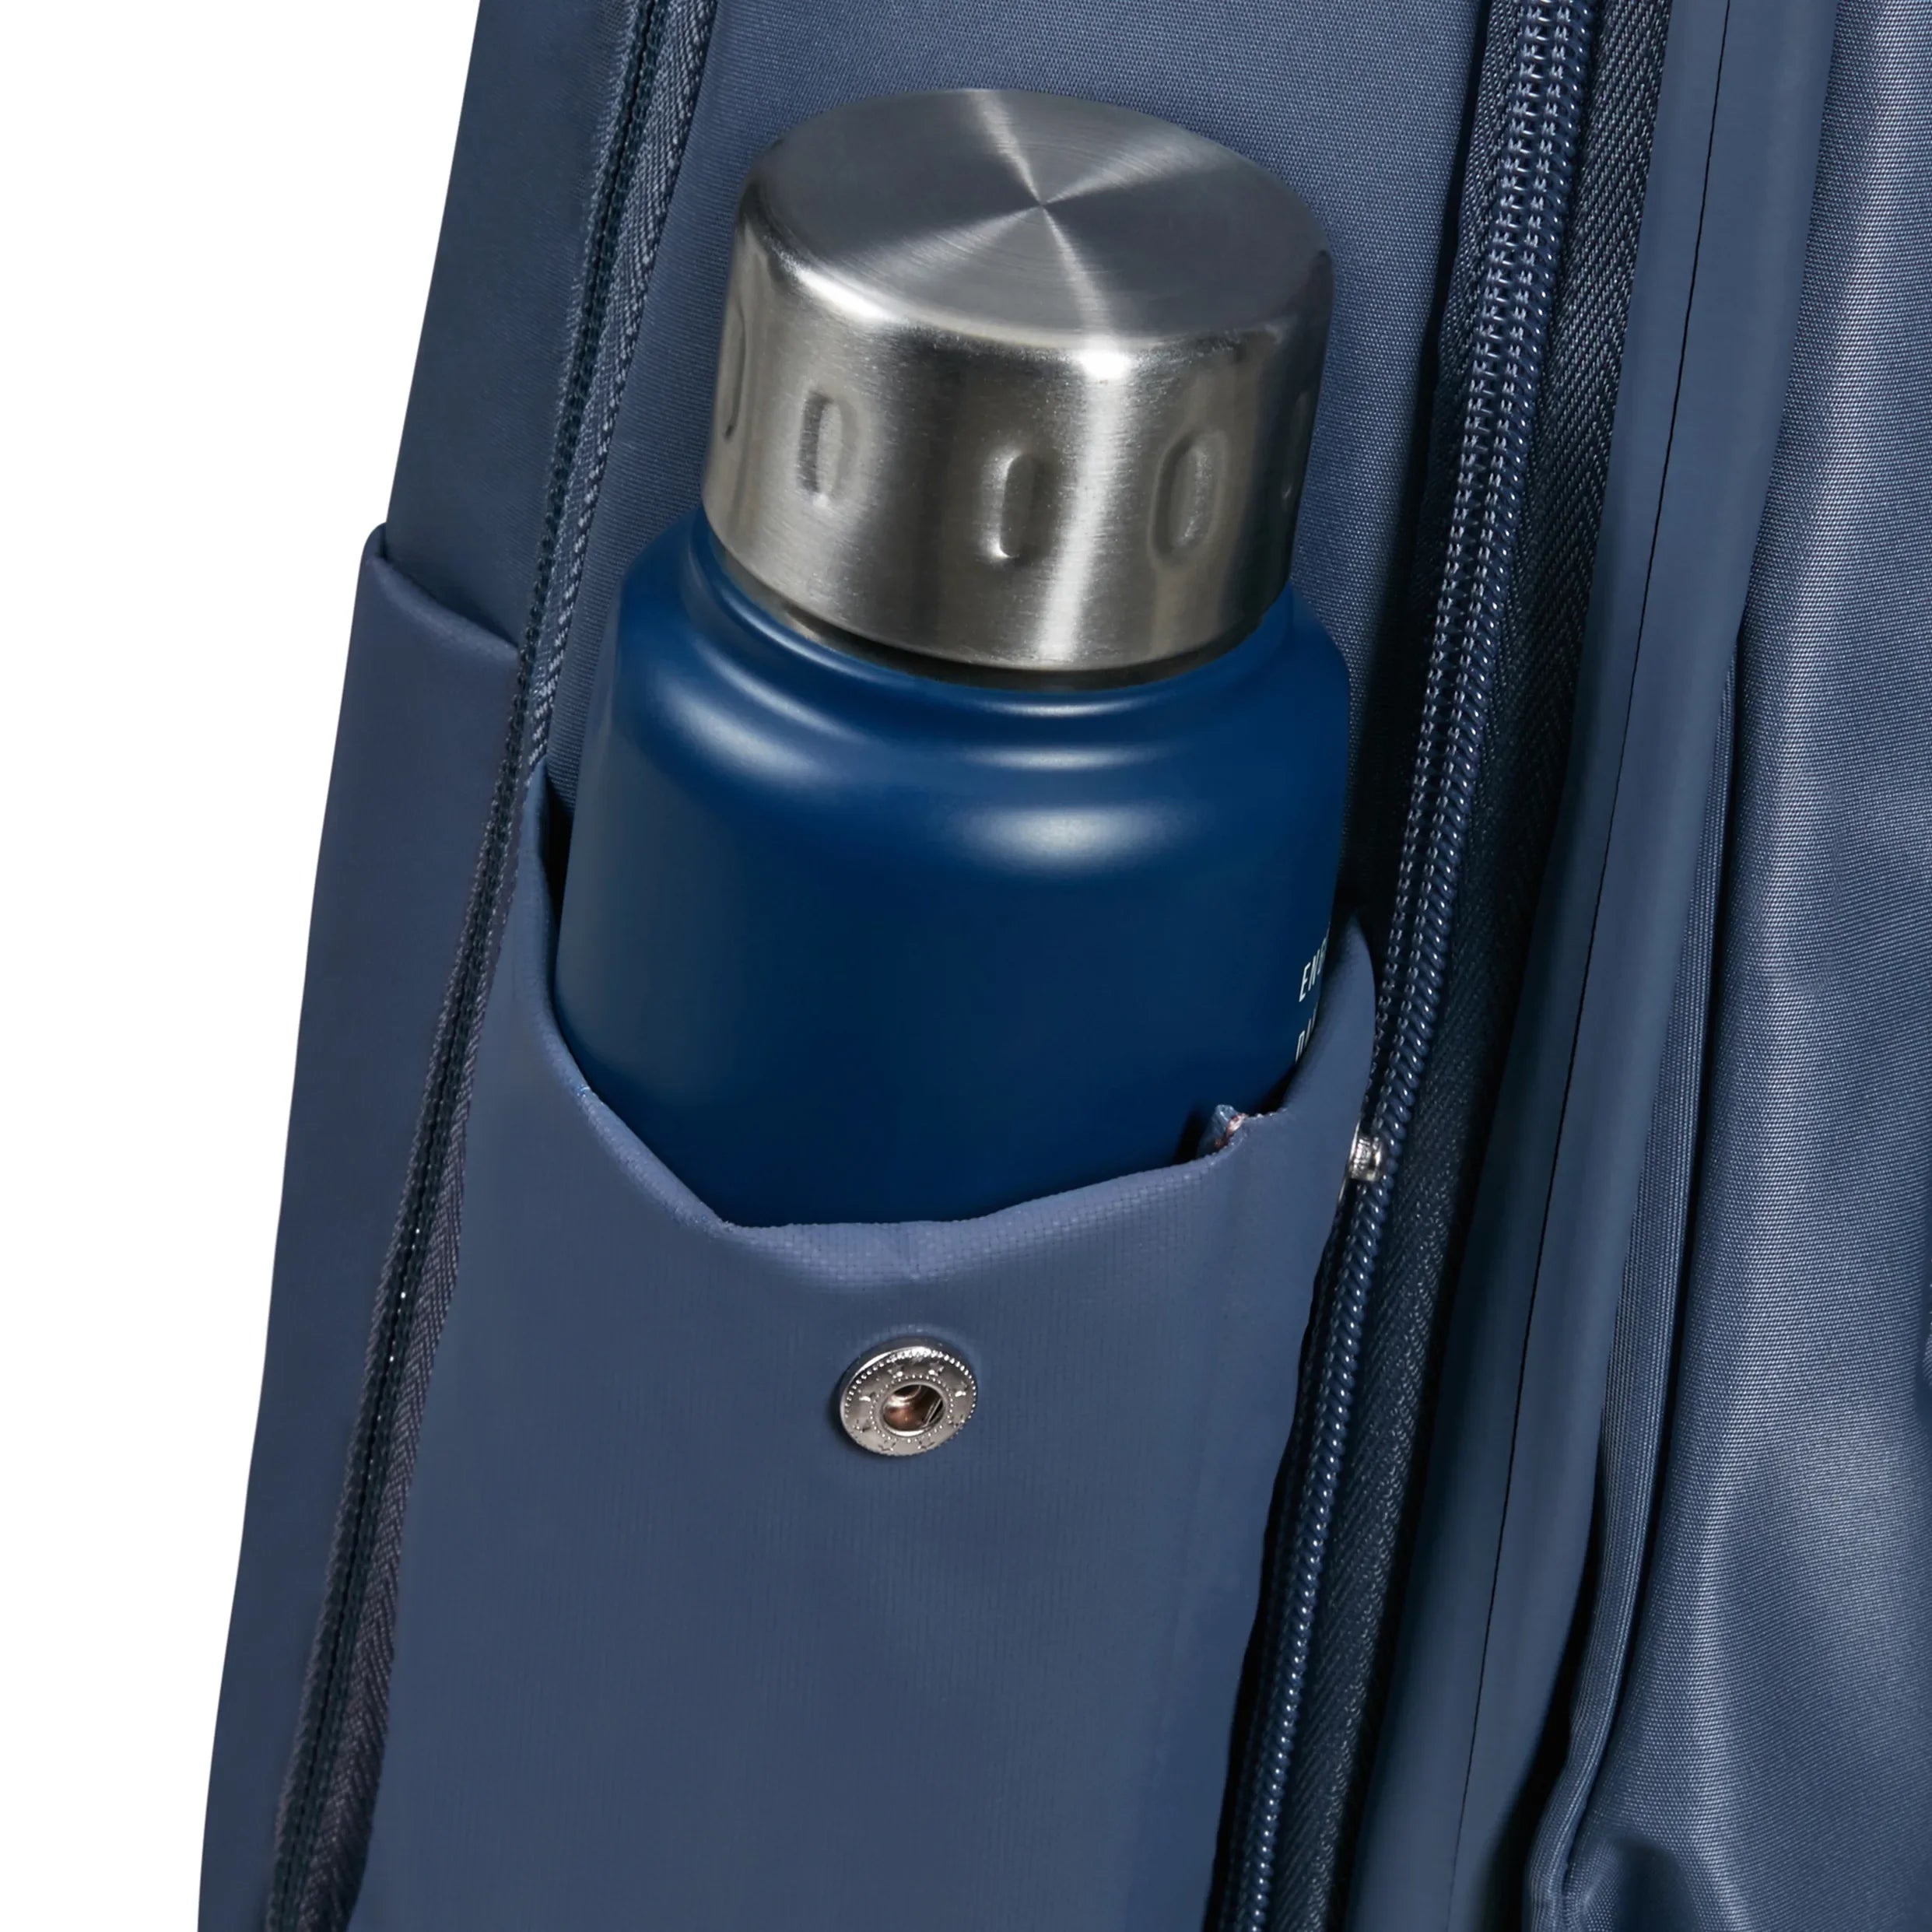 Samsonite Workationist Backpack 43 cm - Blueberry